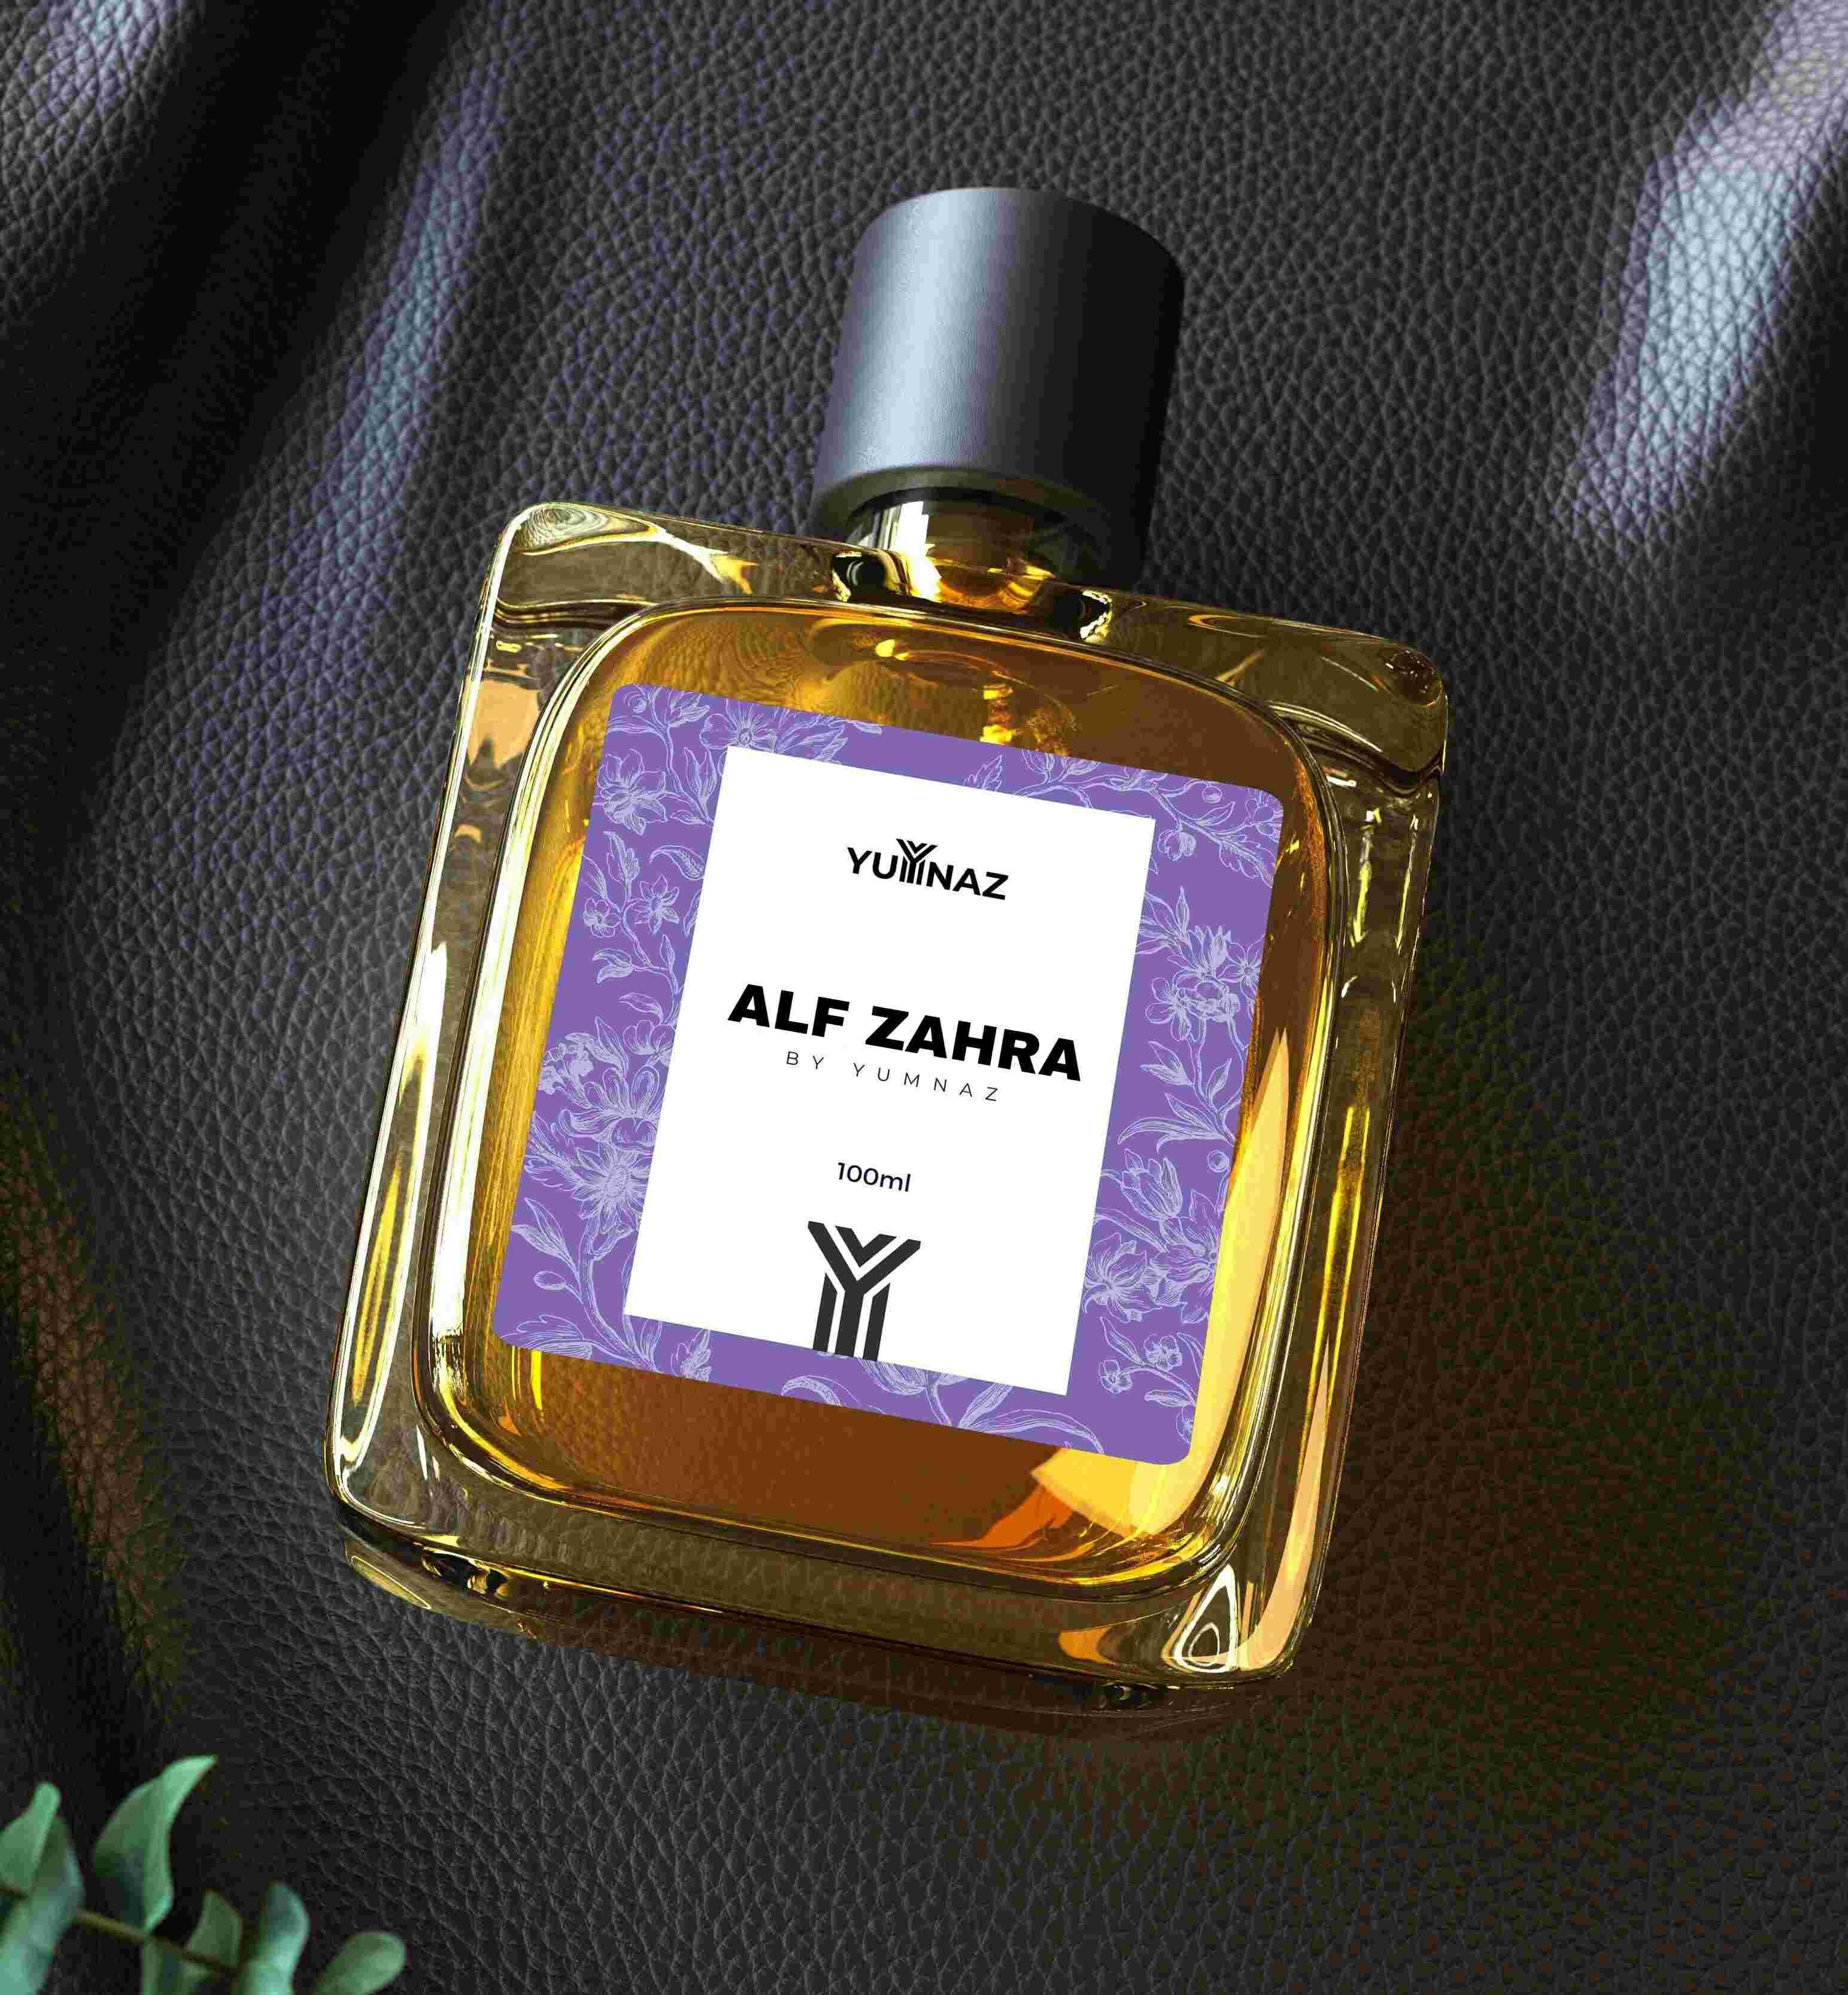 Alf Zahra Perfume Price in Pakistan